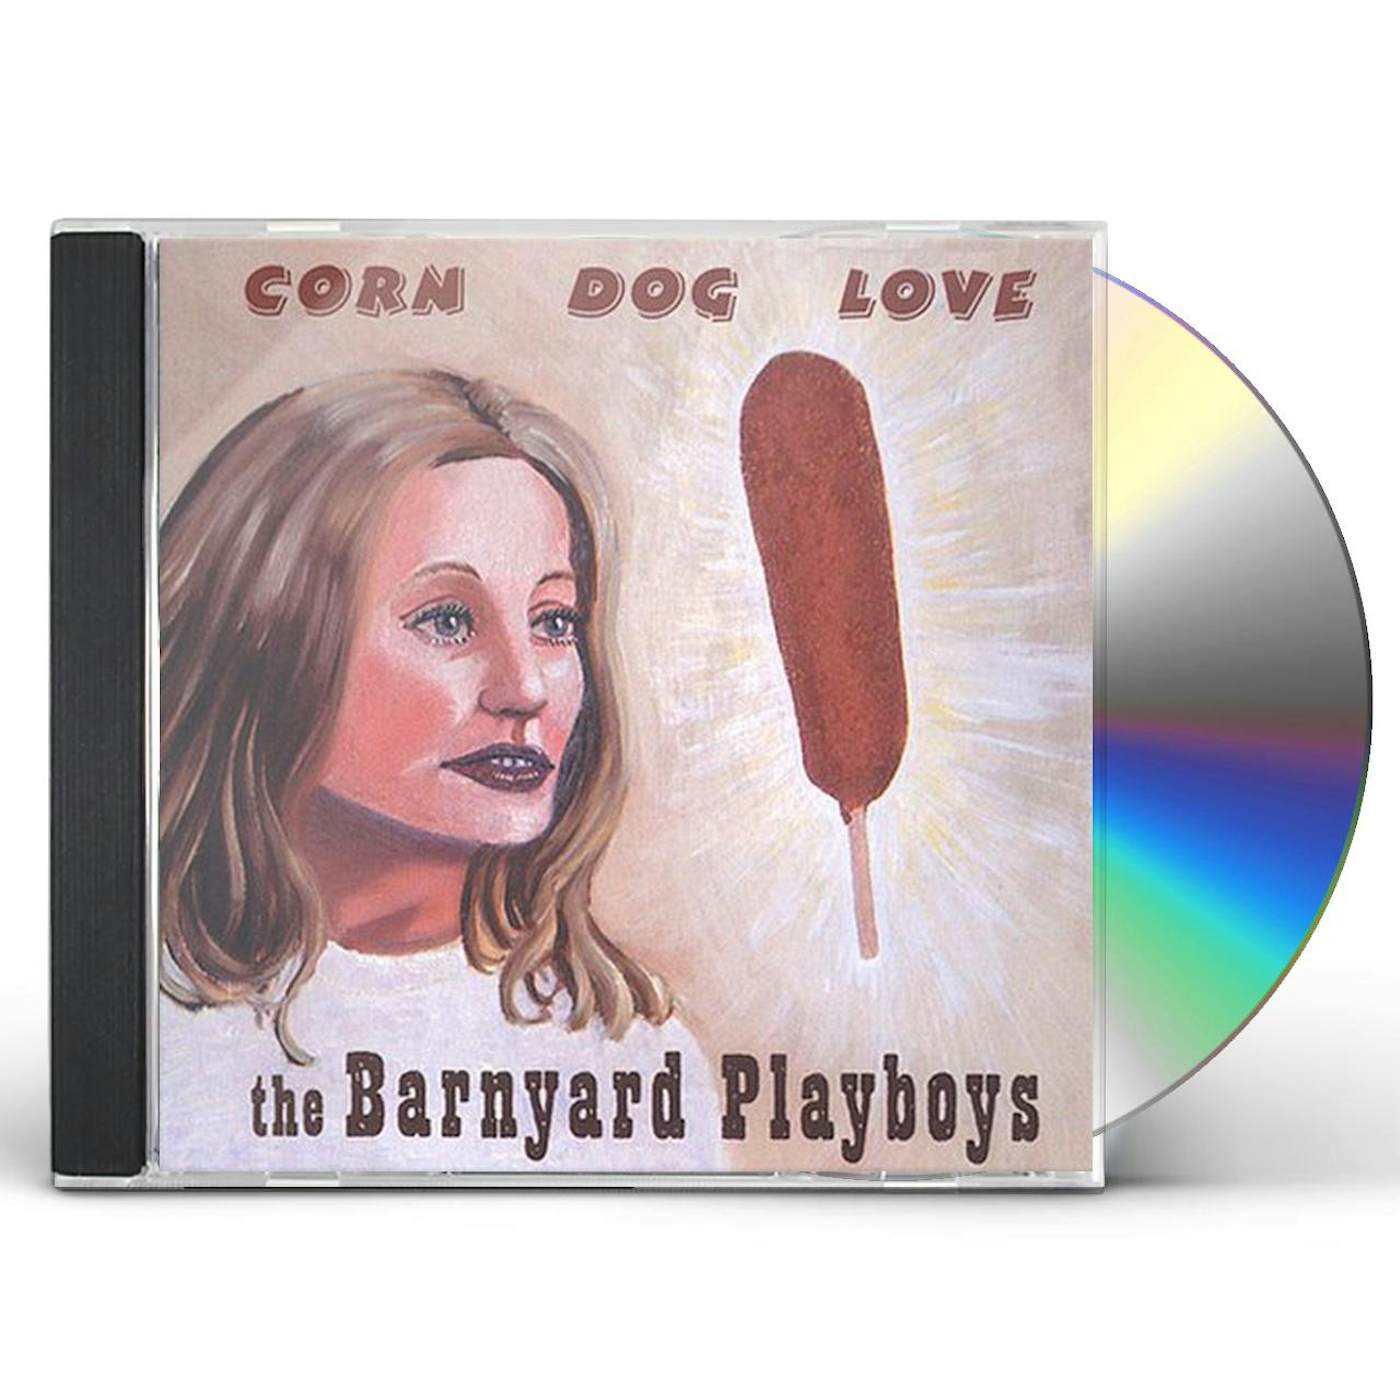 Barnyard Playboys CORN DOG LOVE CD